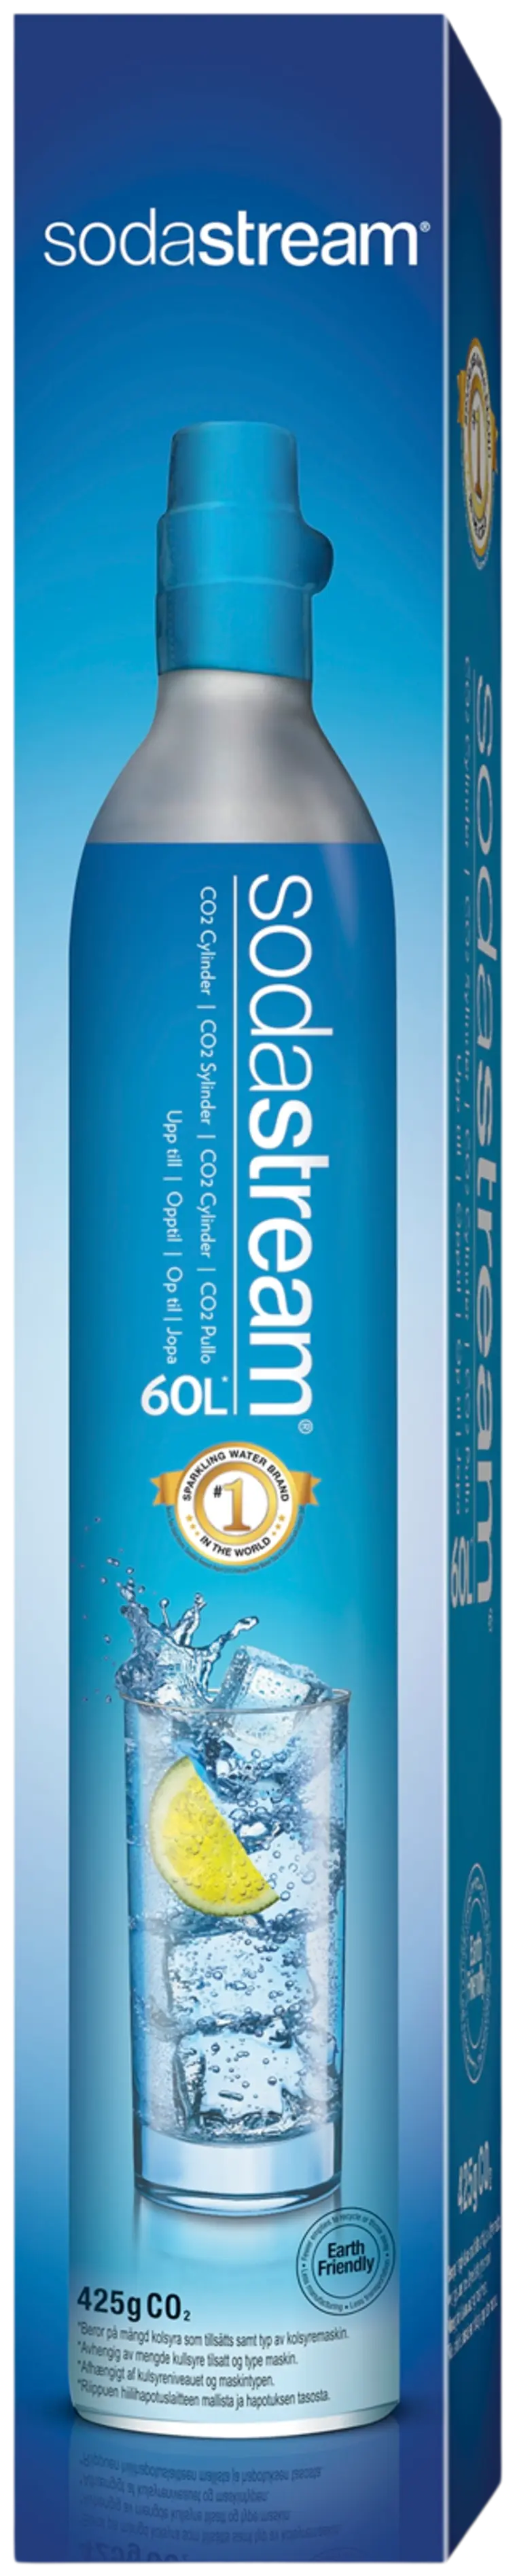 SodaStream Extra hiilidioksidisylinteri (CO2) 60L (425g)